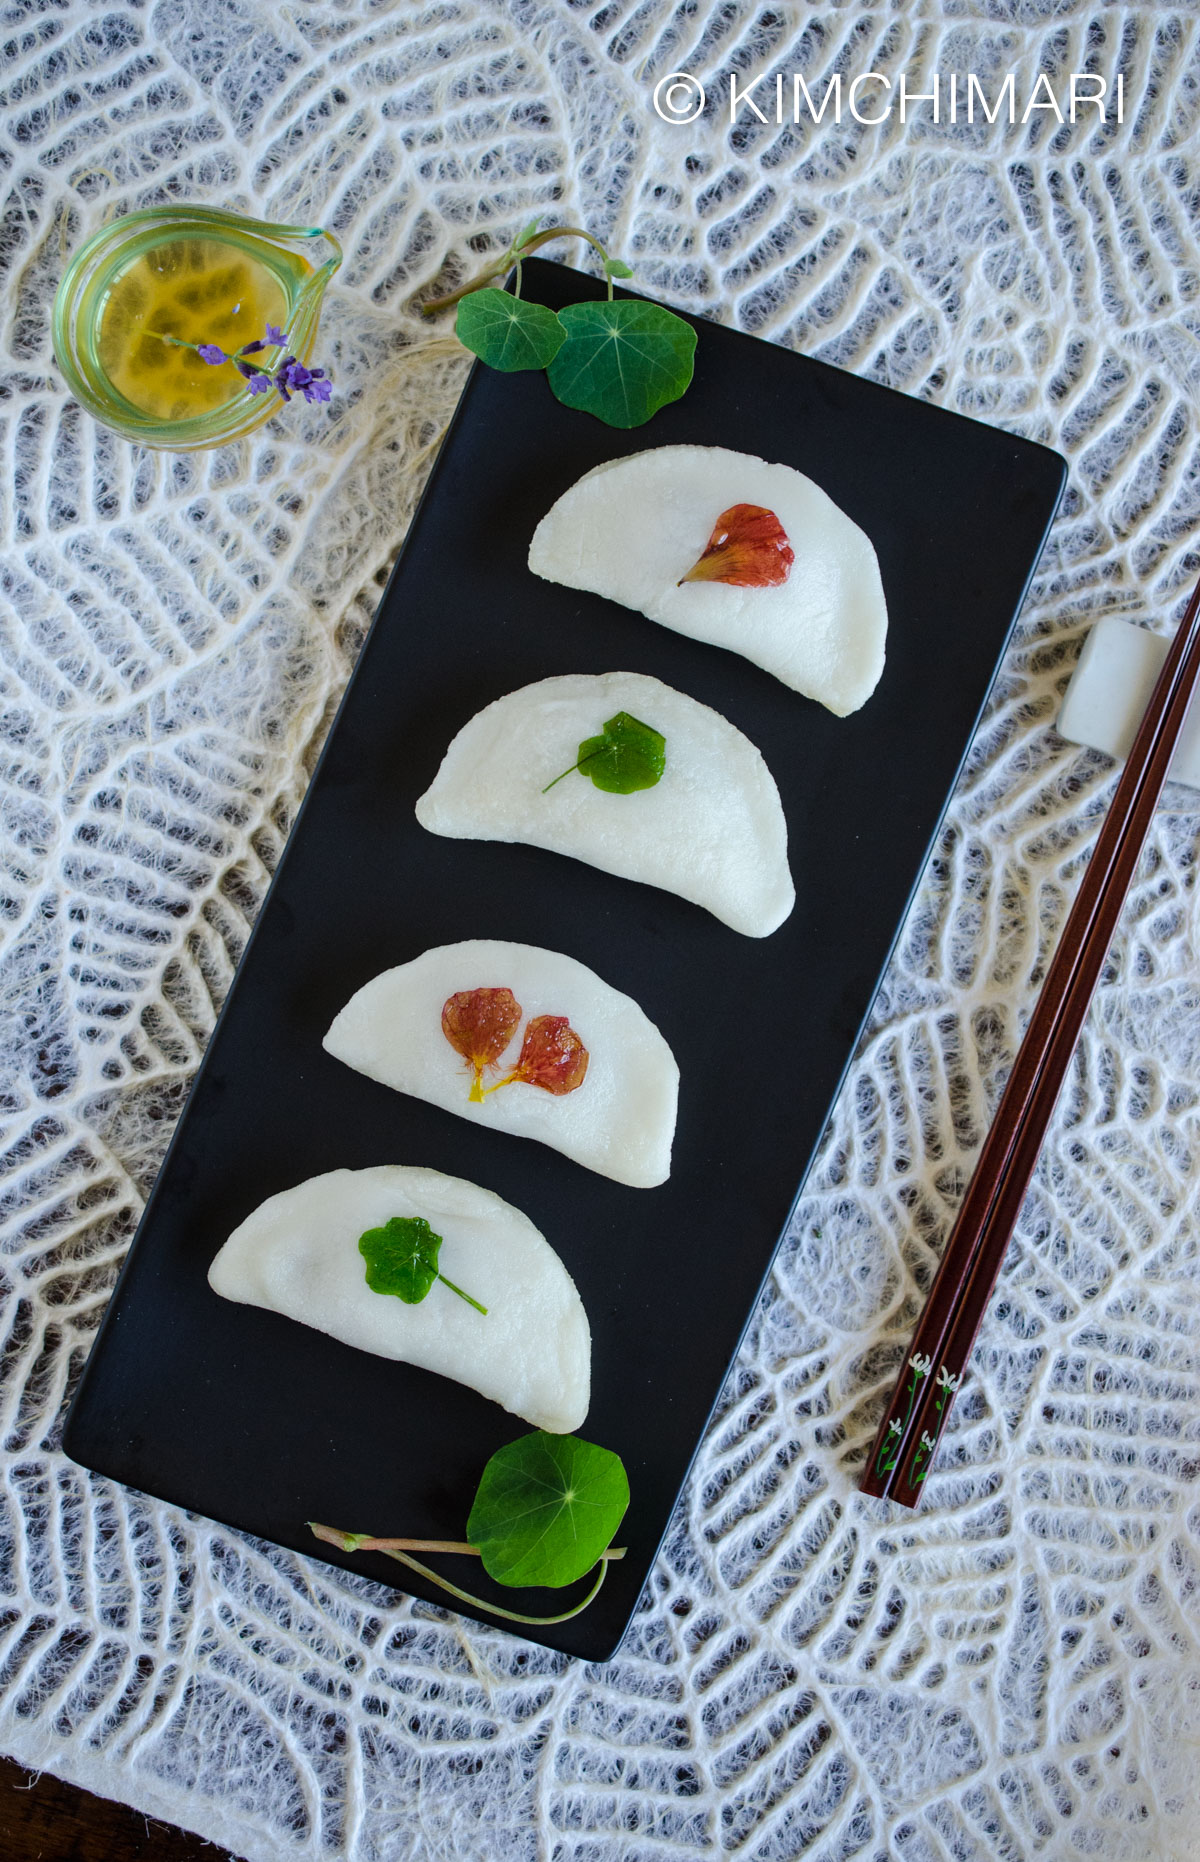 Pan-Fried Rice Cake Dumplings (Bukkumi) with Nasturtiums